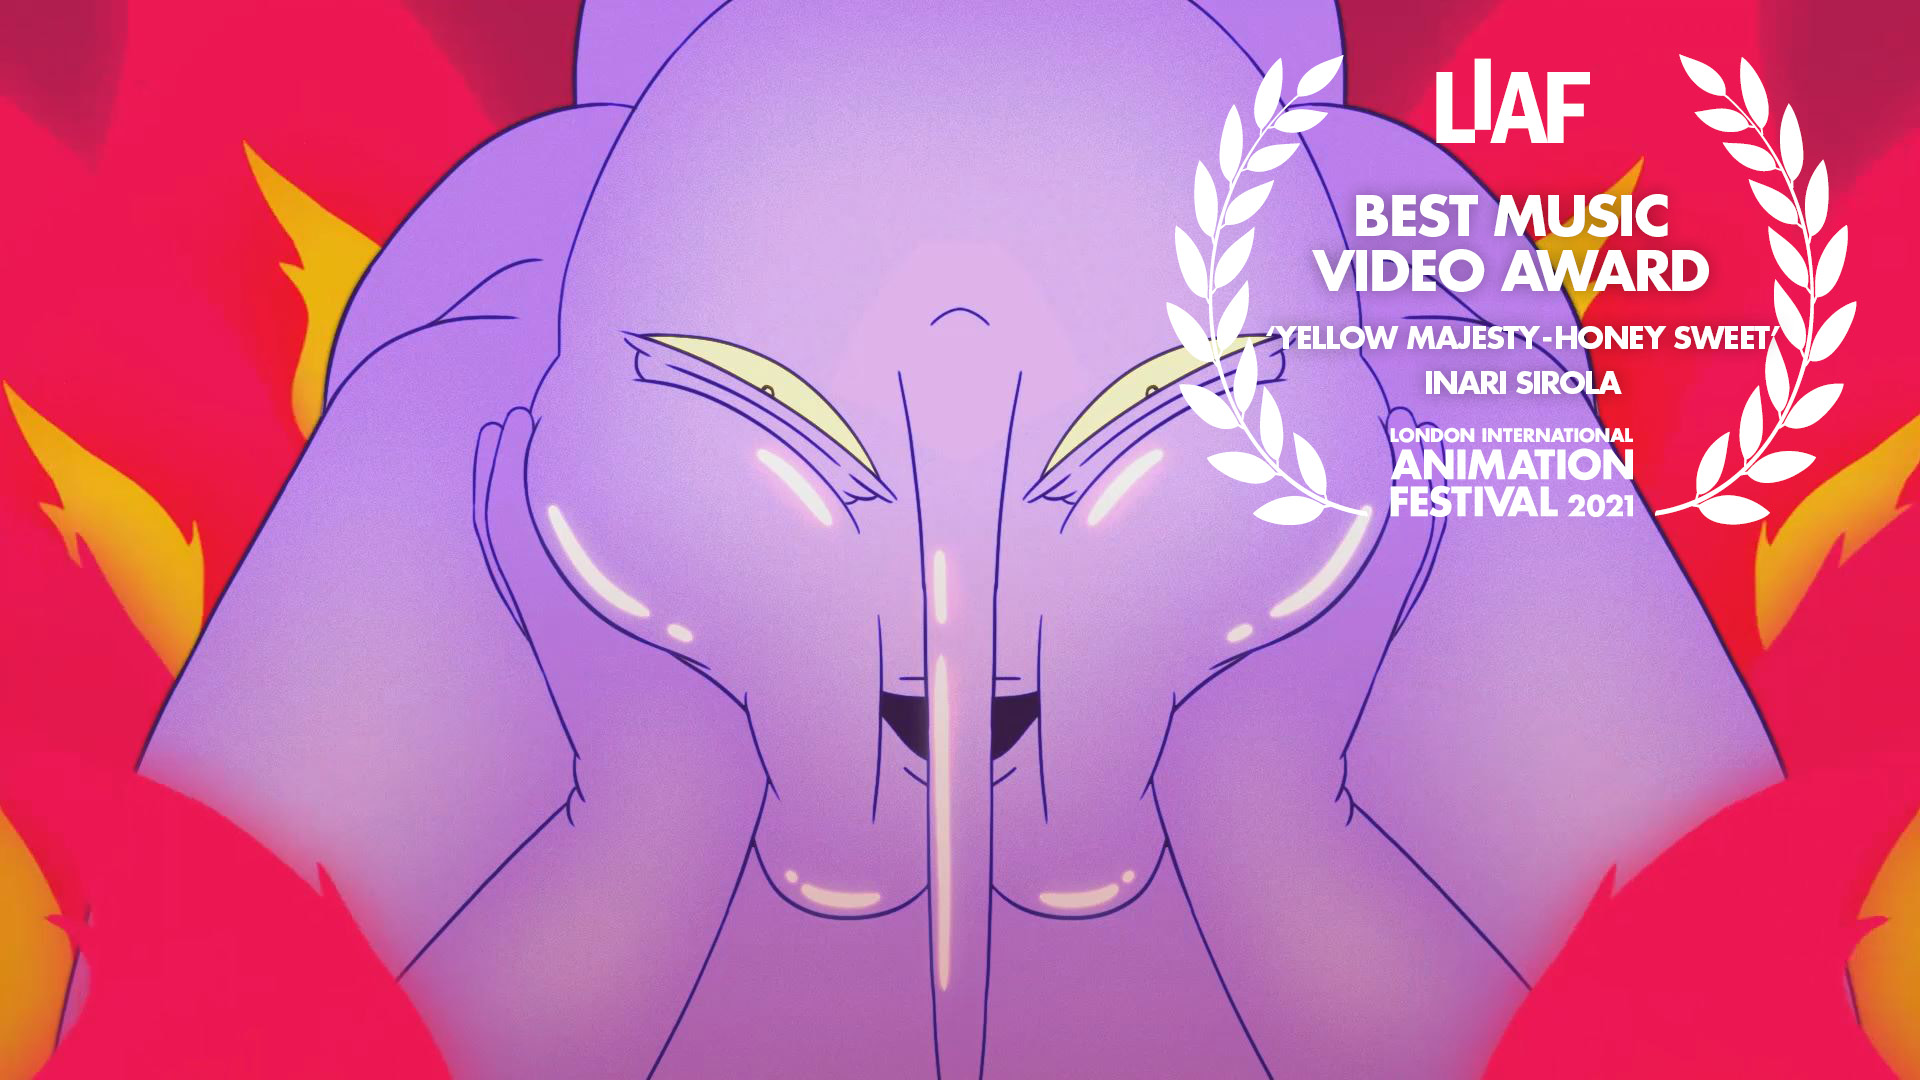 Best Music Video Award, Yellow Majesty, Honey Sweet, Inari Sirola, LIAF, London International Animation Festival